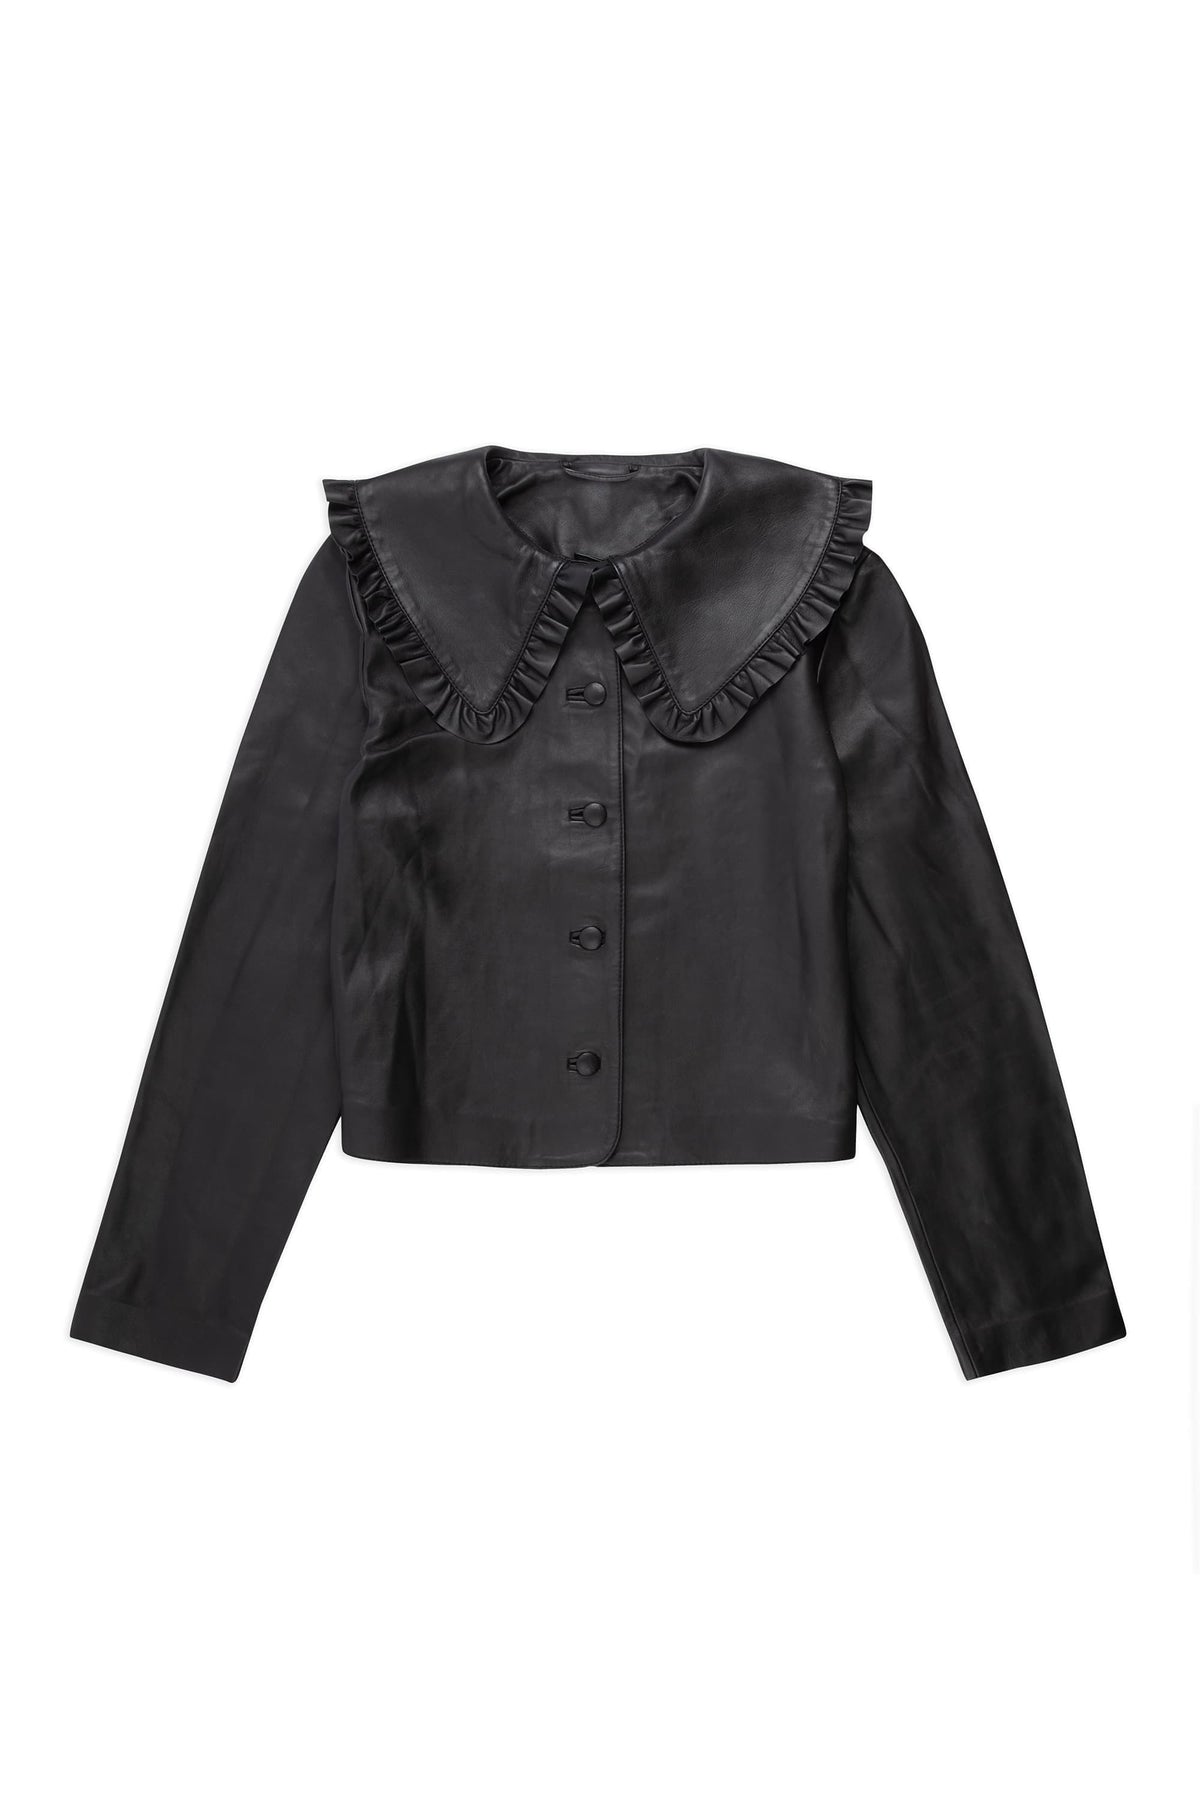 Debbie - Black Frill Collar Leather Jacket - RIXO ⋆